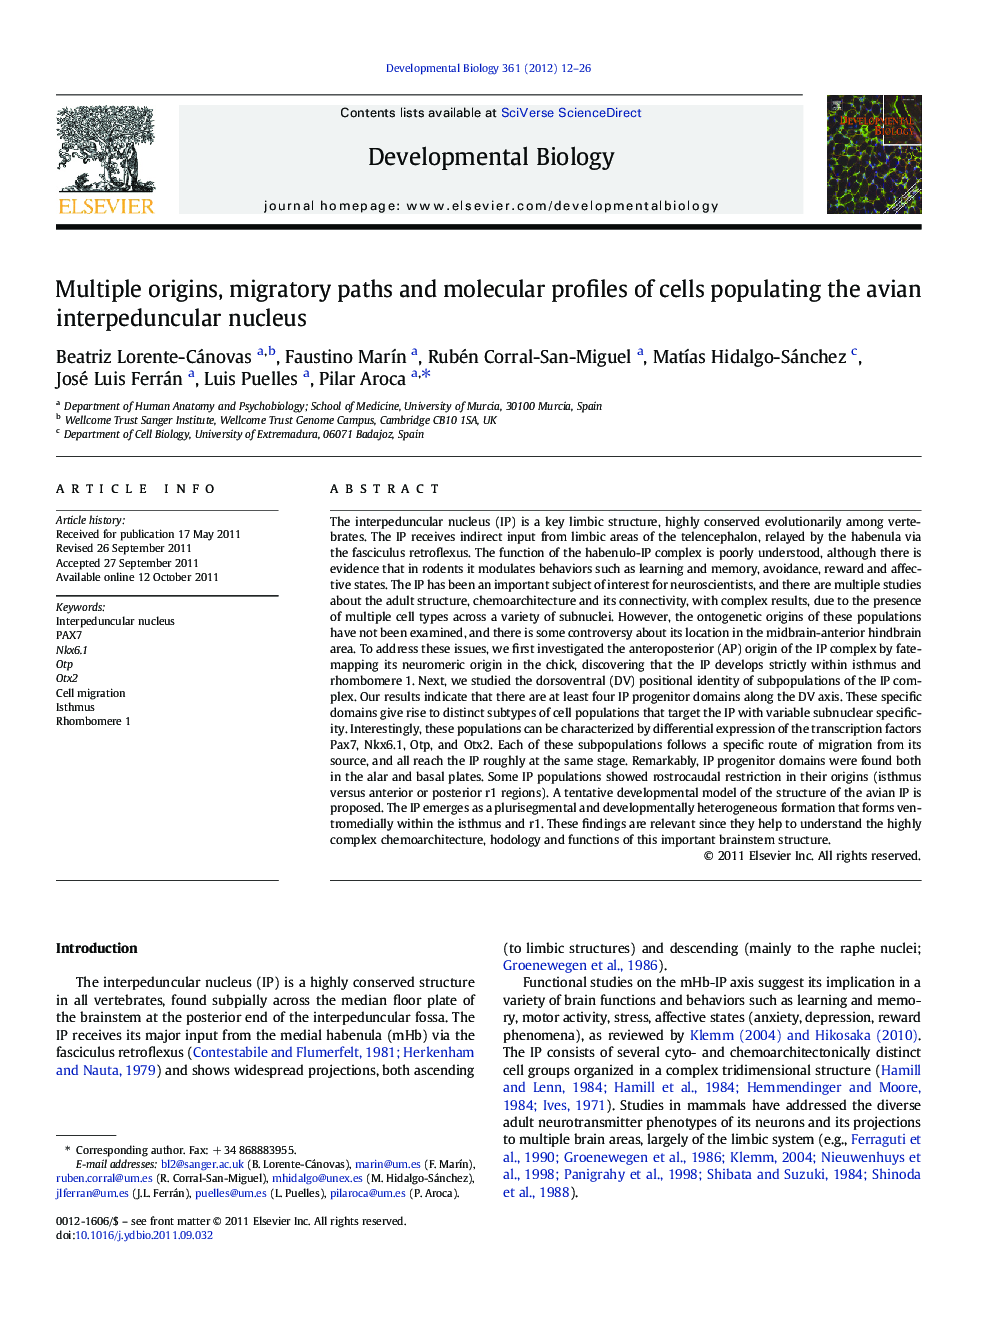 Multiple origins, migratory paths and molecular profiles of cells populating the avian interpeduncular nucleus